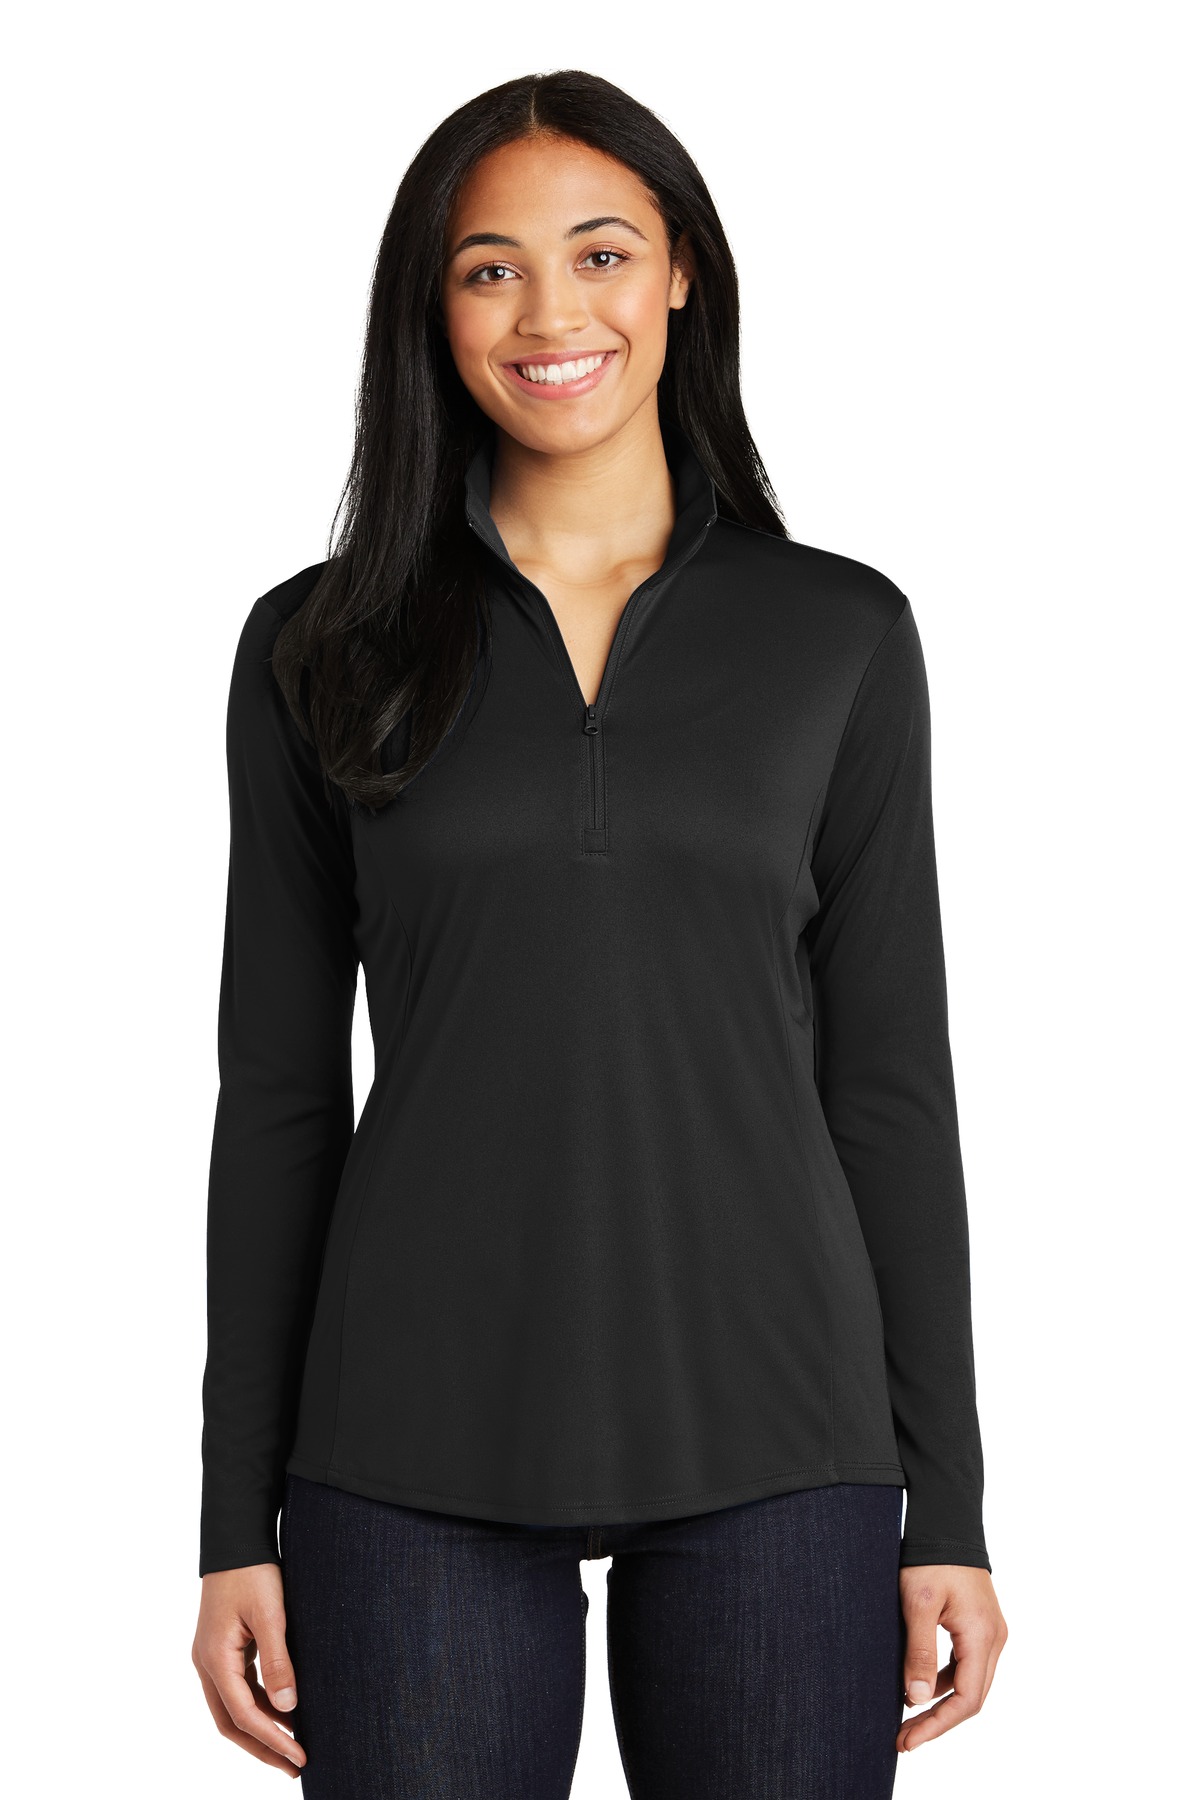 Sport-Tek Ladies Sweatshirts&Fleece Hospitality Activewear ® Ladies PosiCharge® Competitor 1/4-Zip Pullover.-Sport-Tek